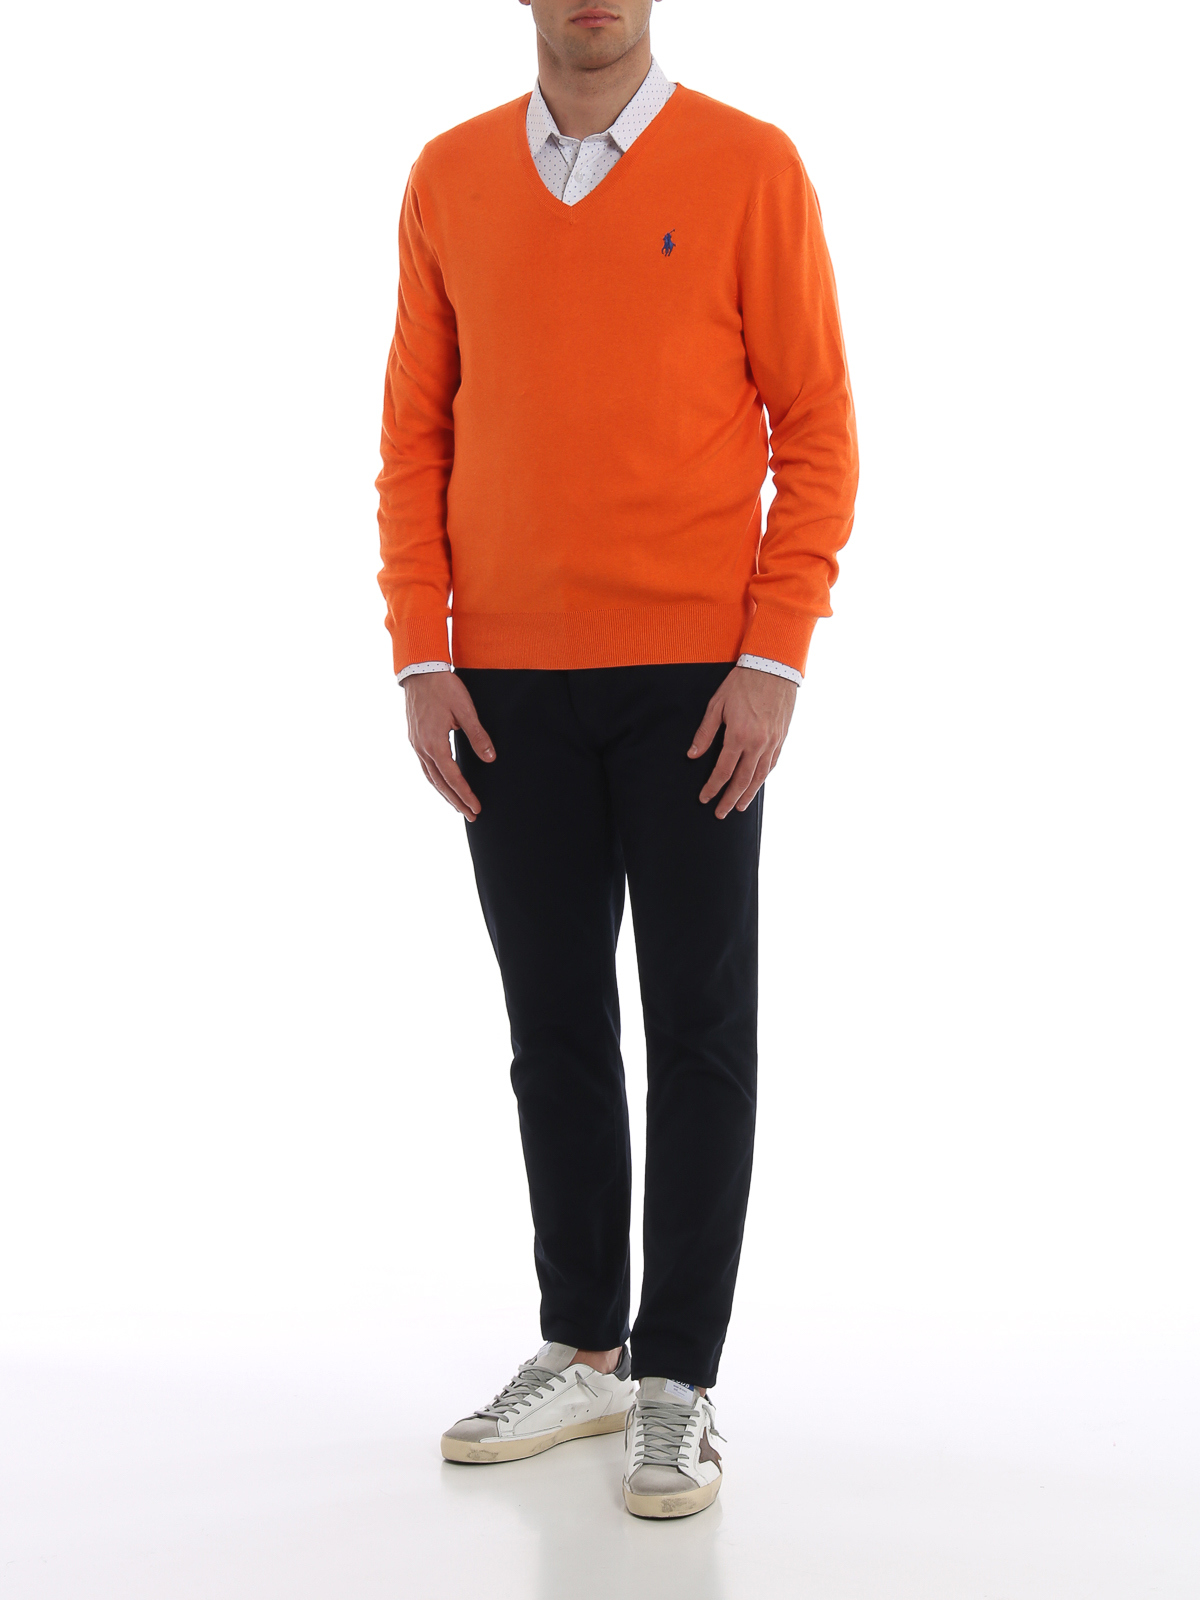 V Slim - - fit orange A40S4602C4782 cotton necks V-neck Polo Lauren sweater Ralph